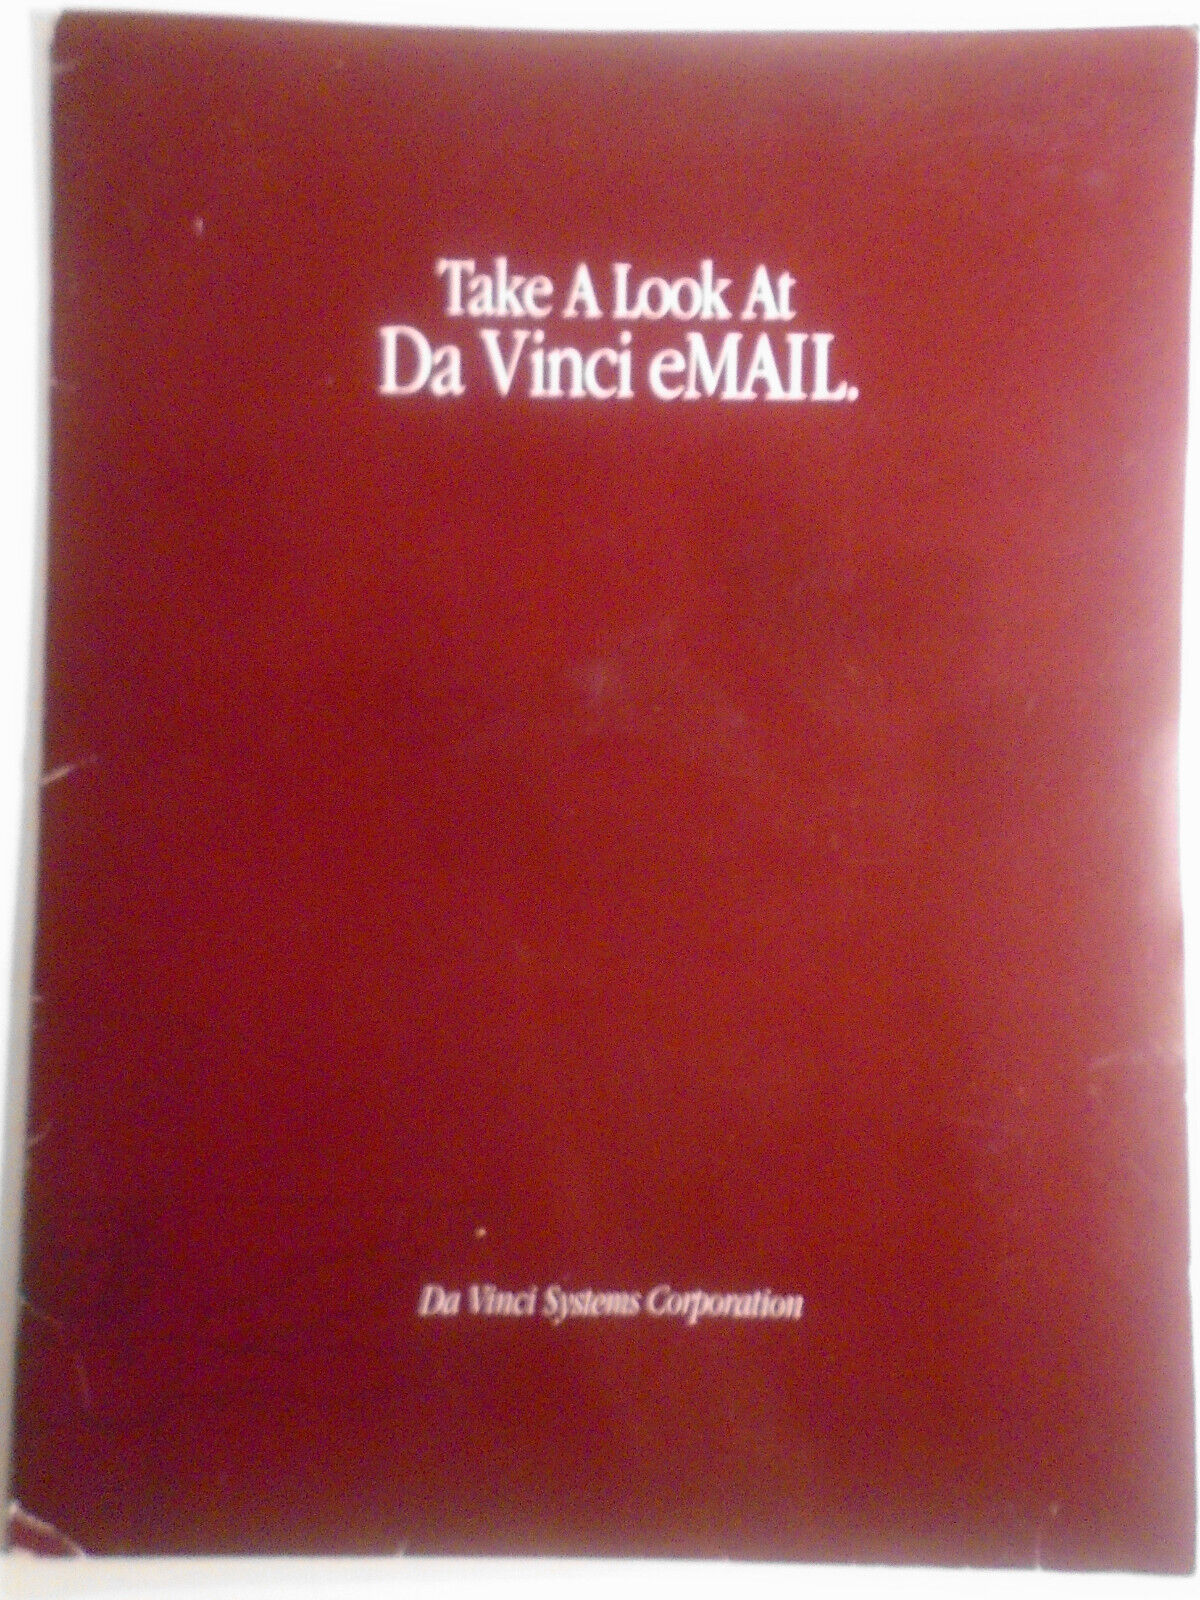 Take a look at Da Vinci eMail - 1990 Press Kit